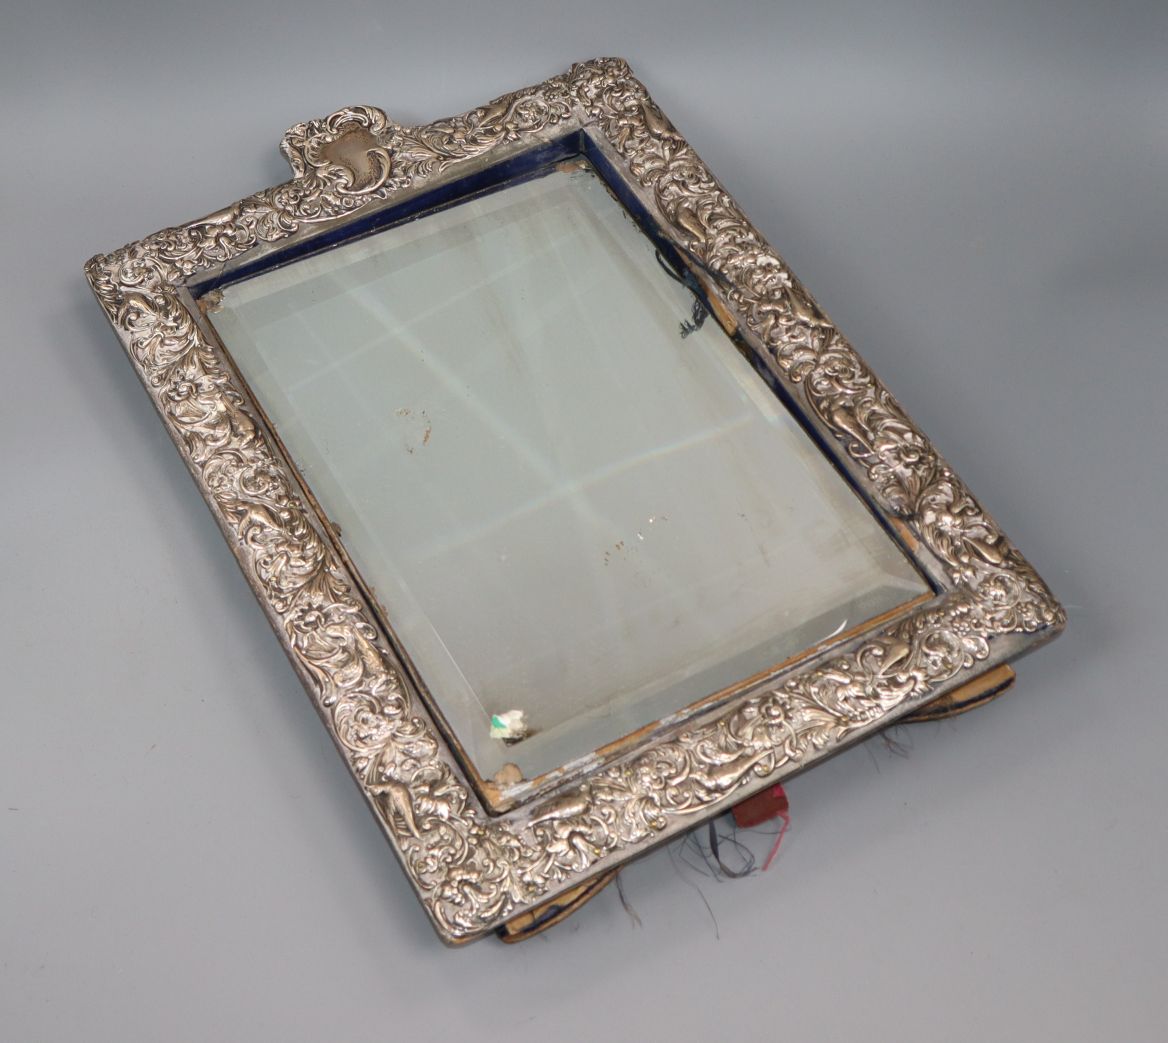 An Edwardian repousse silver mounted rectangular easel mirror, William Comyns, London, 1905, 43.